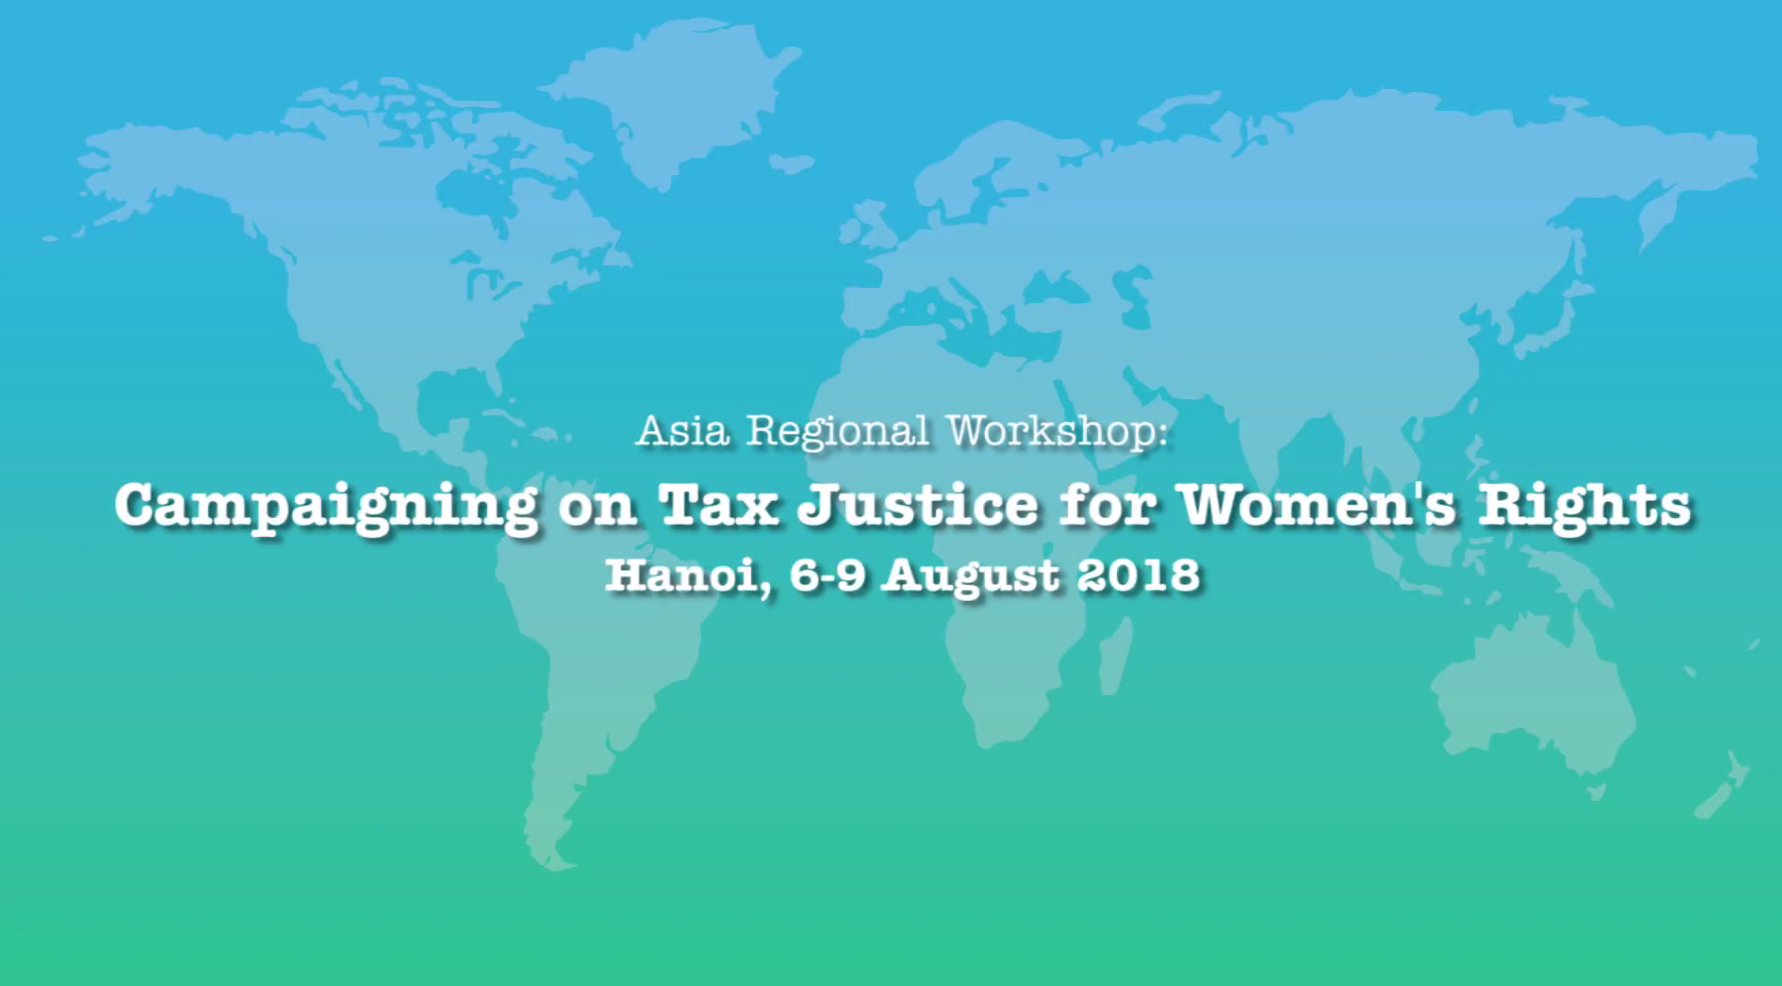 2018-10-28-Asia Regional Workshop Campaigning On Tax Justice For Women's Rights-EN-IMAGEM